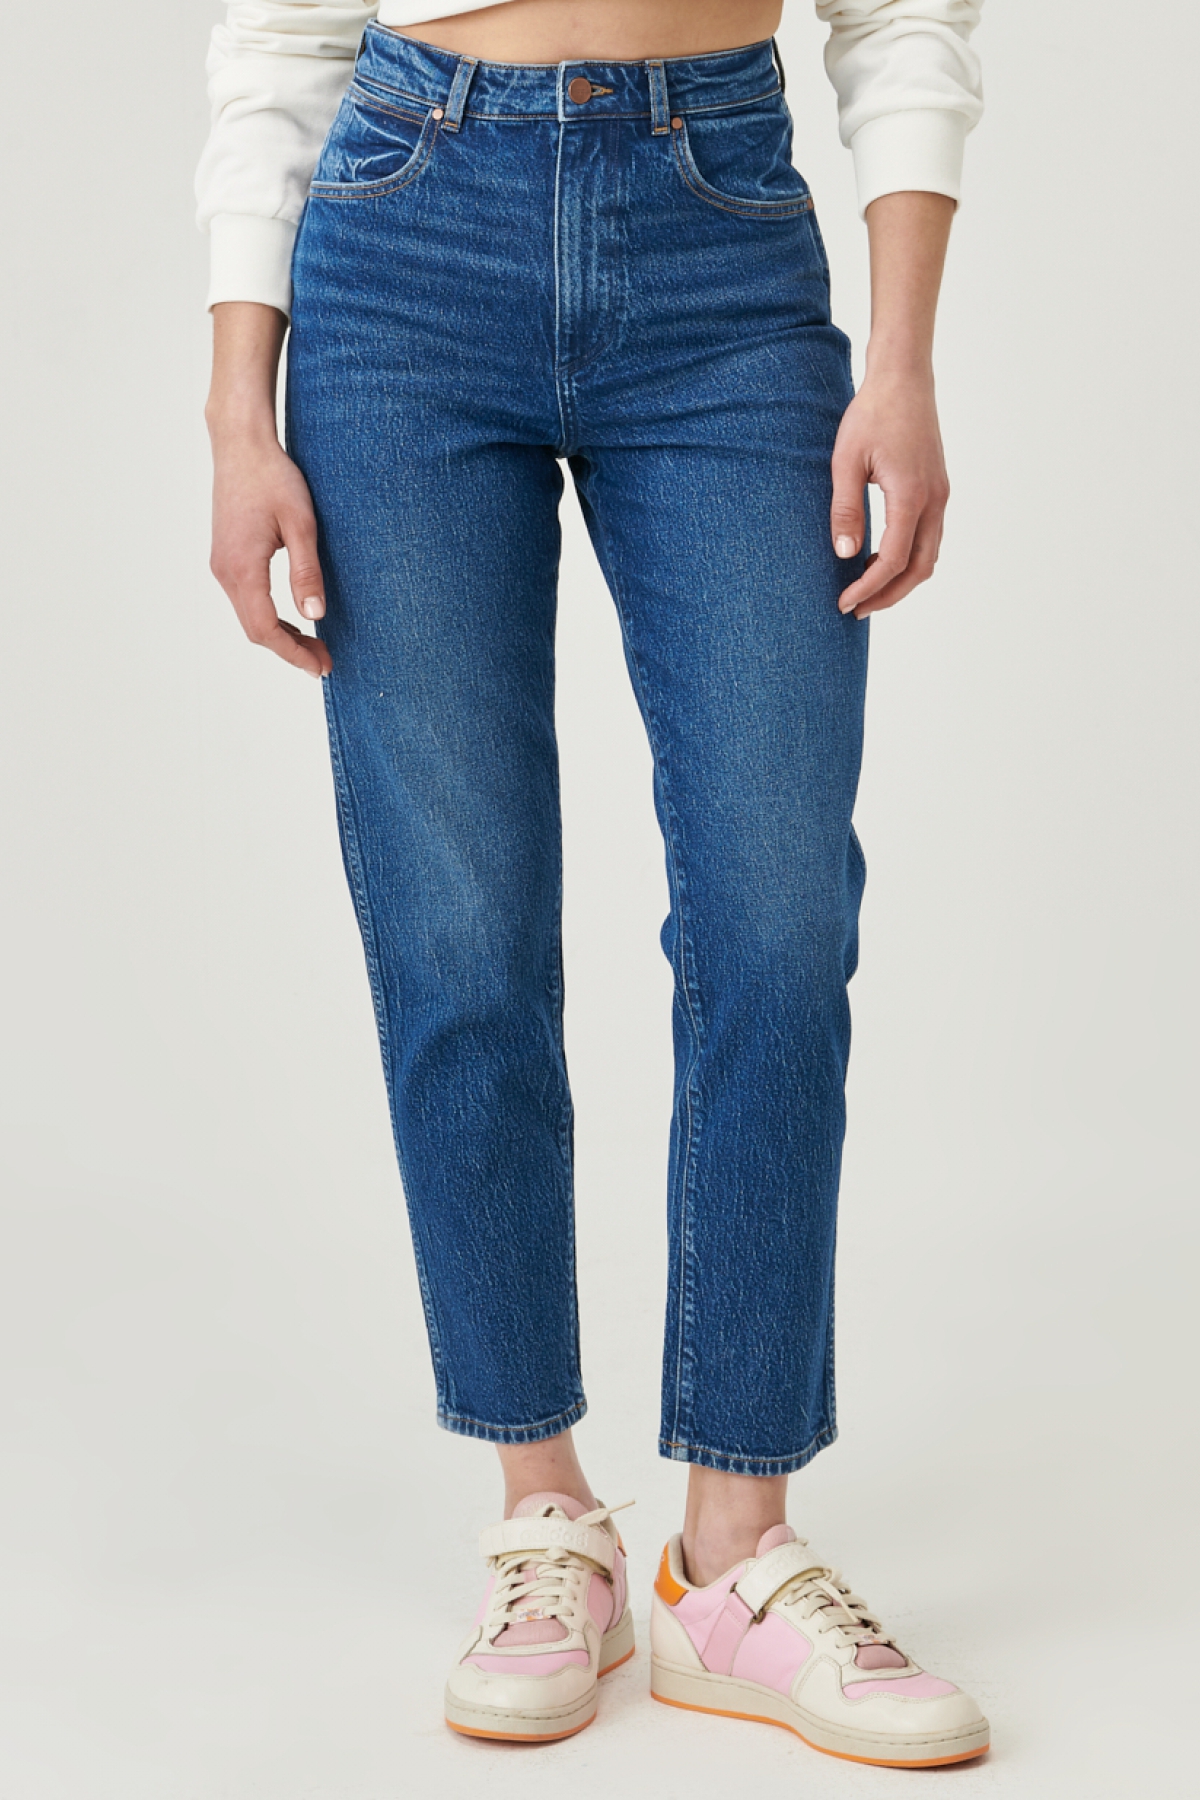 dizginler Silme sakar mom jeans modelleri Baharat indirim Nokta